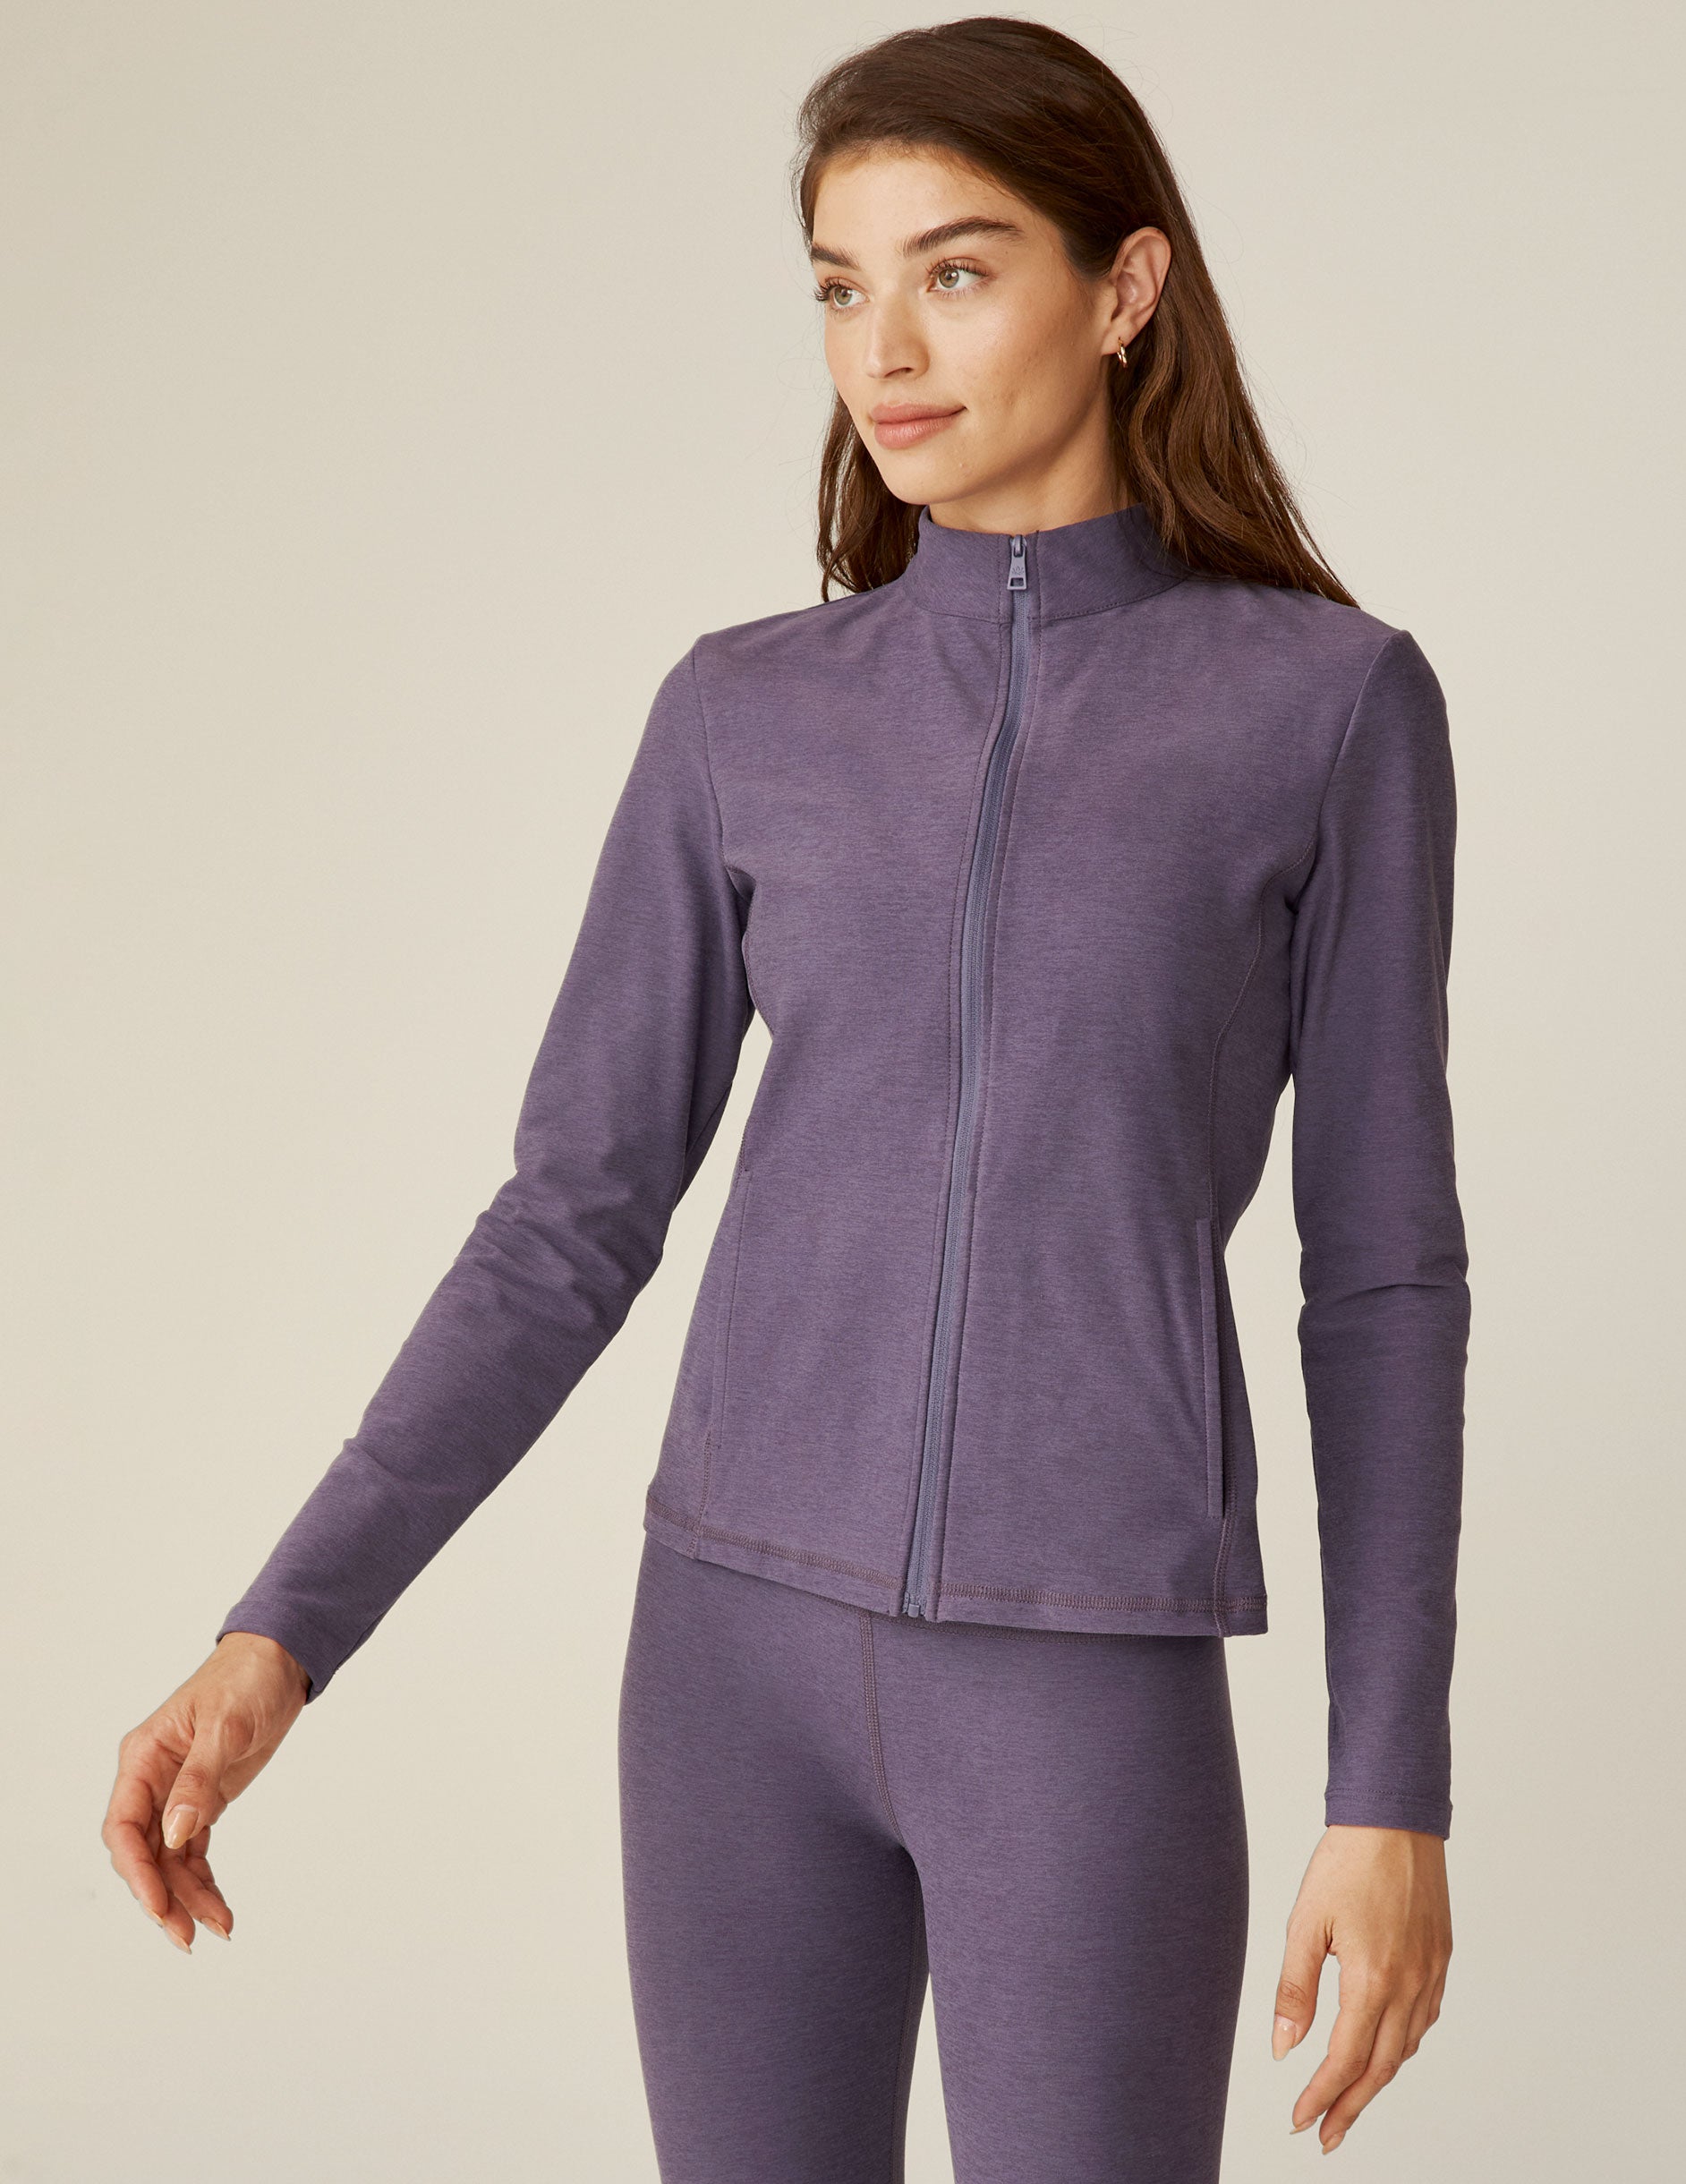 purple mock neck zip-up jacket with pockets. 